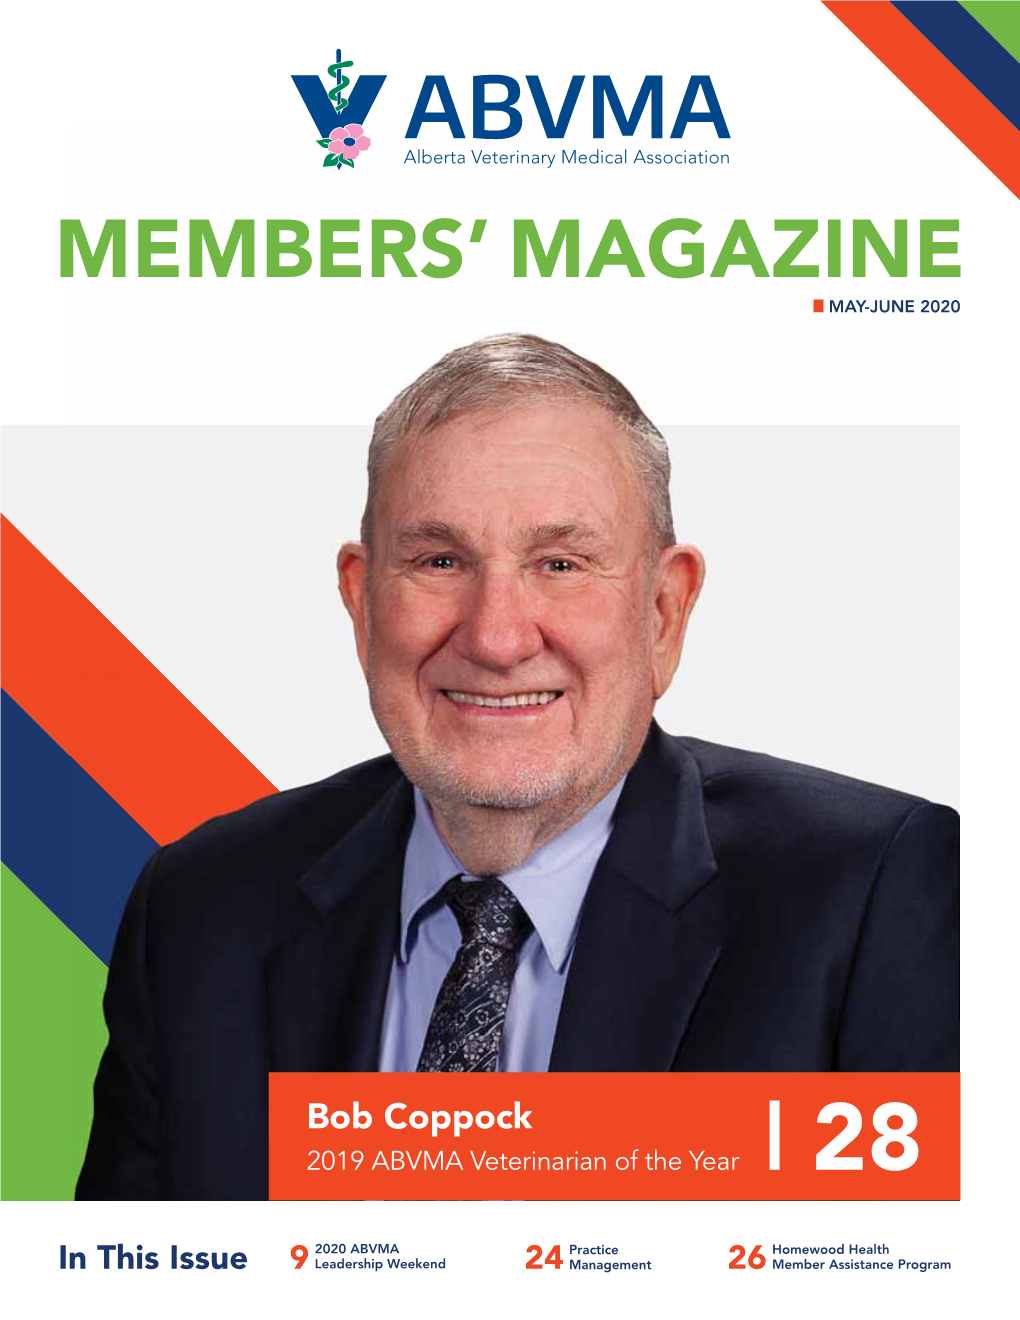 Bob Coppock 2019 ABVMA Veterinarian of the Year 28